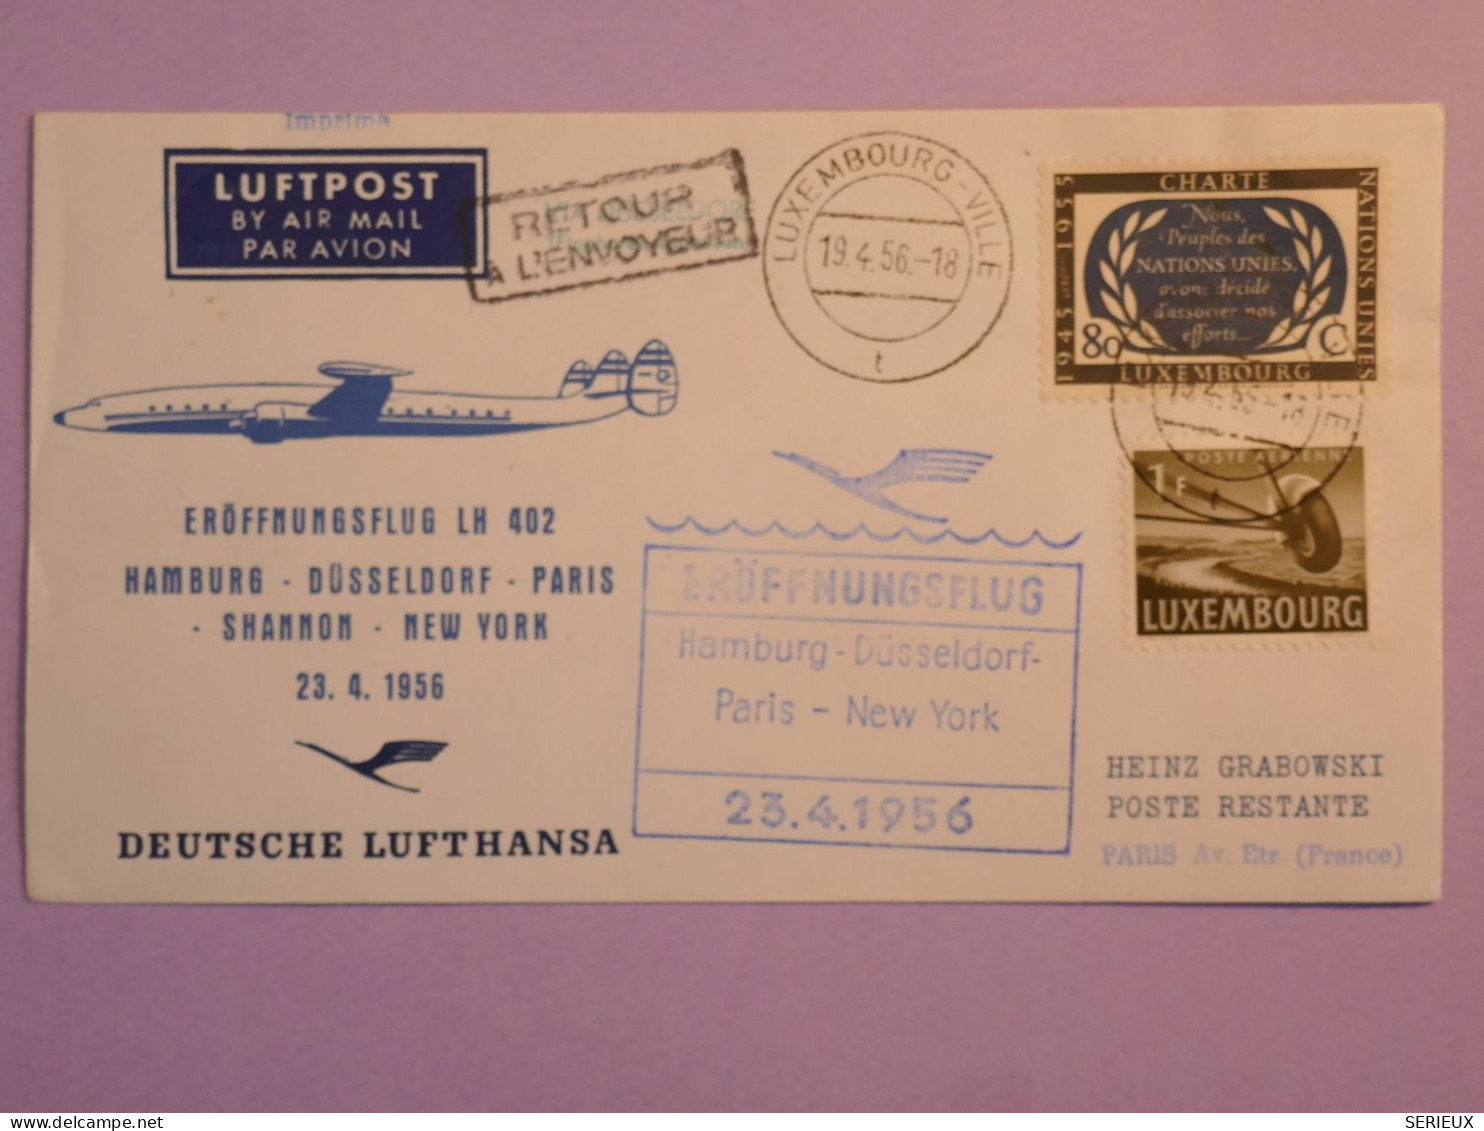 BS17  LUXEMBOURG BELLE LETTRE  1956 1ER VOL PARIS NEW YORK  USA +NATO+ . NEW YORK  + + AFFR. PLAISANT++ ++ - Covers & Documents